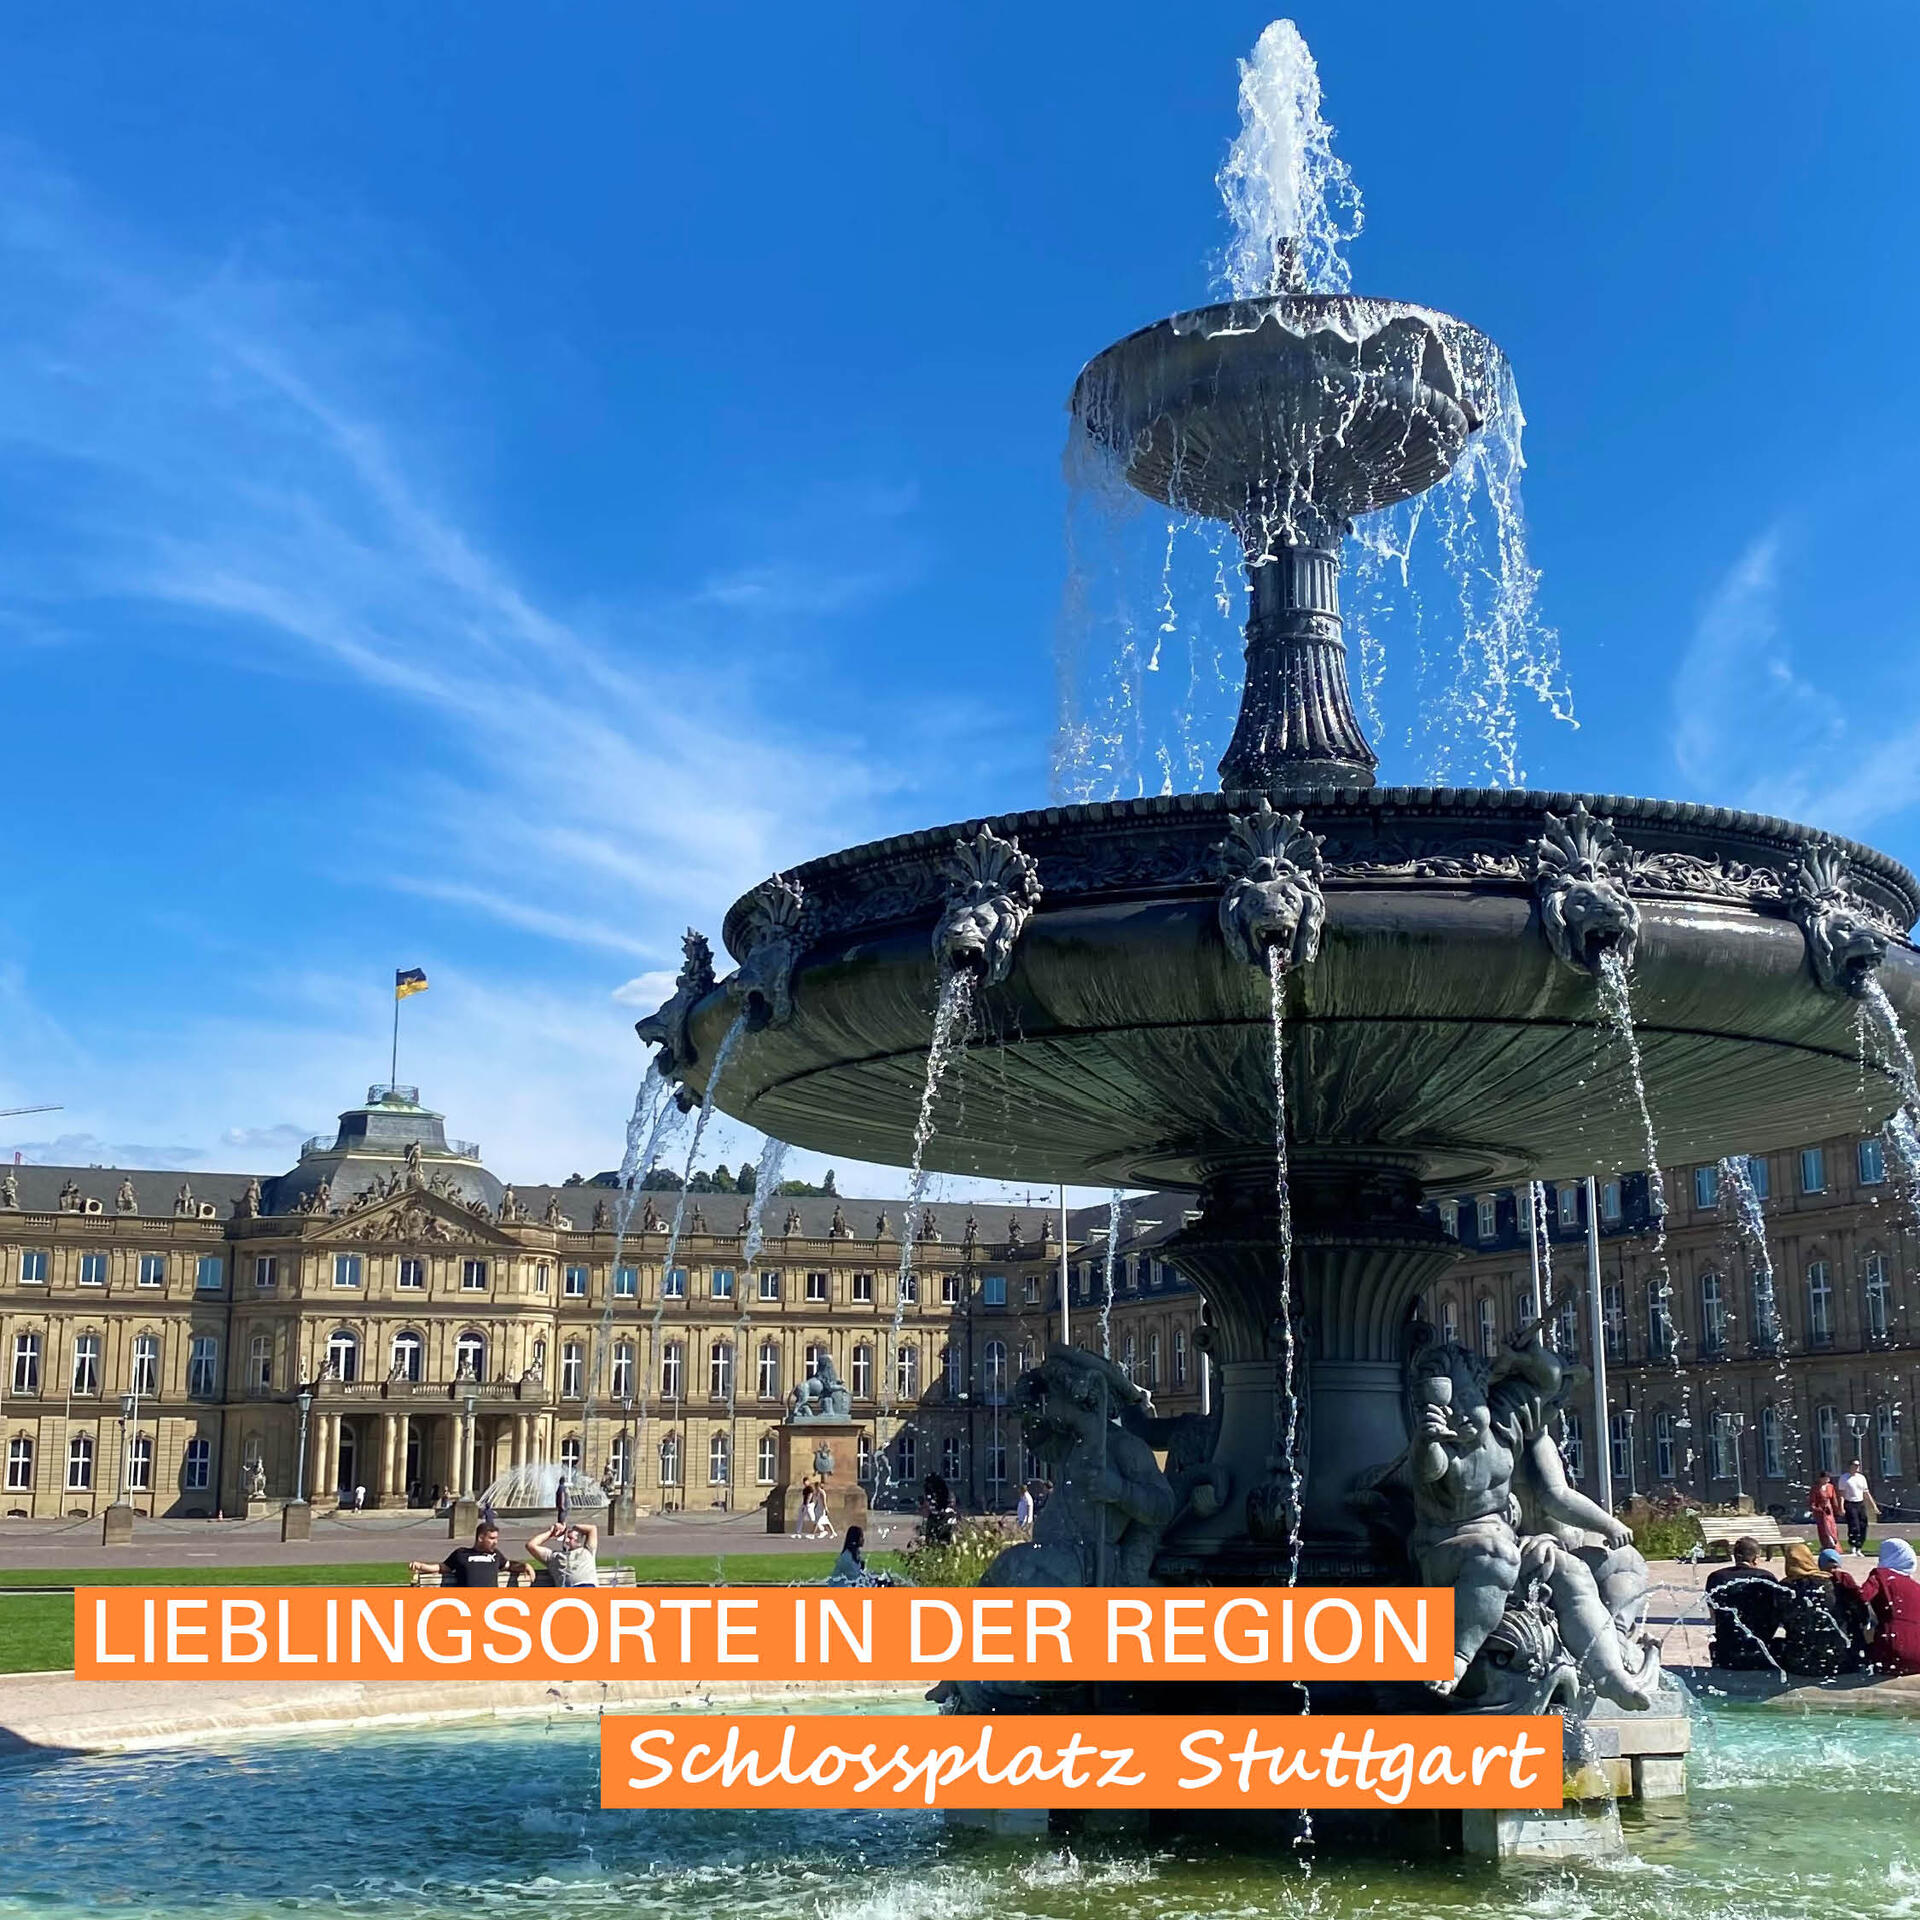 Schlossplatz Stuttgart